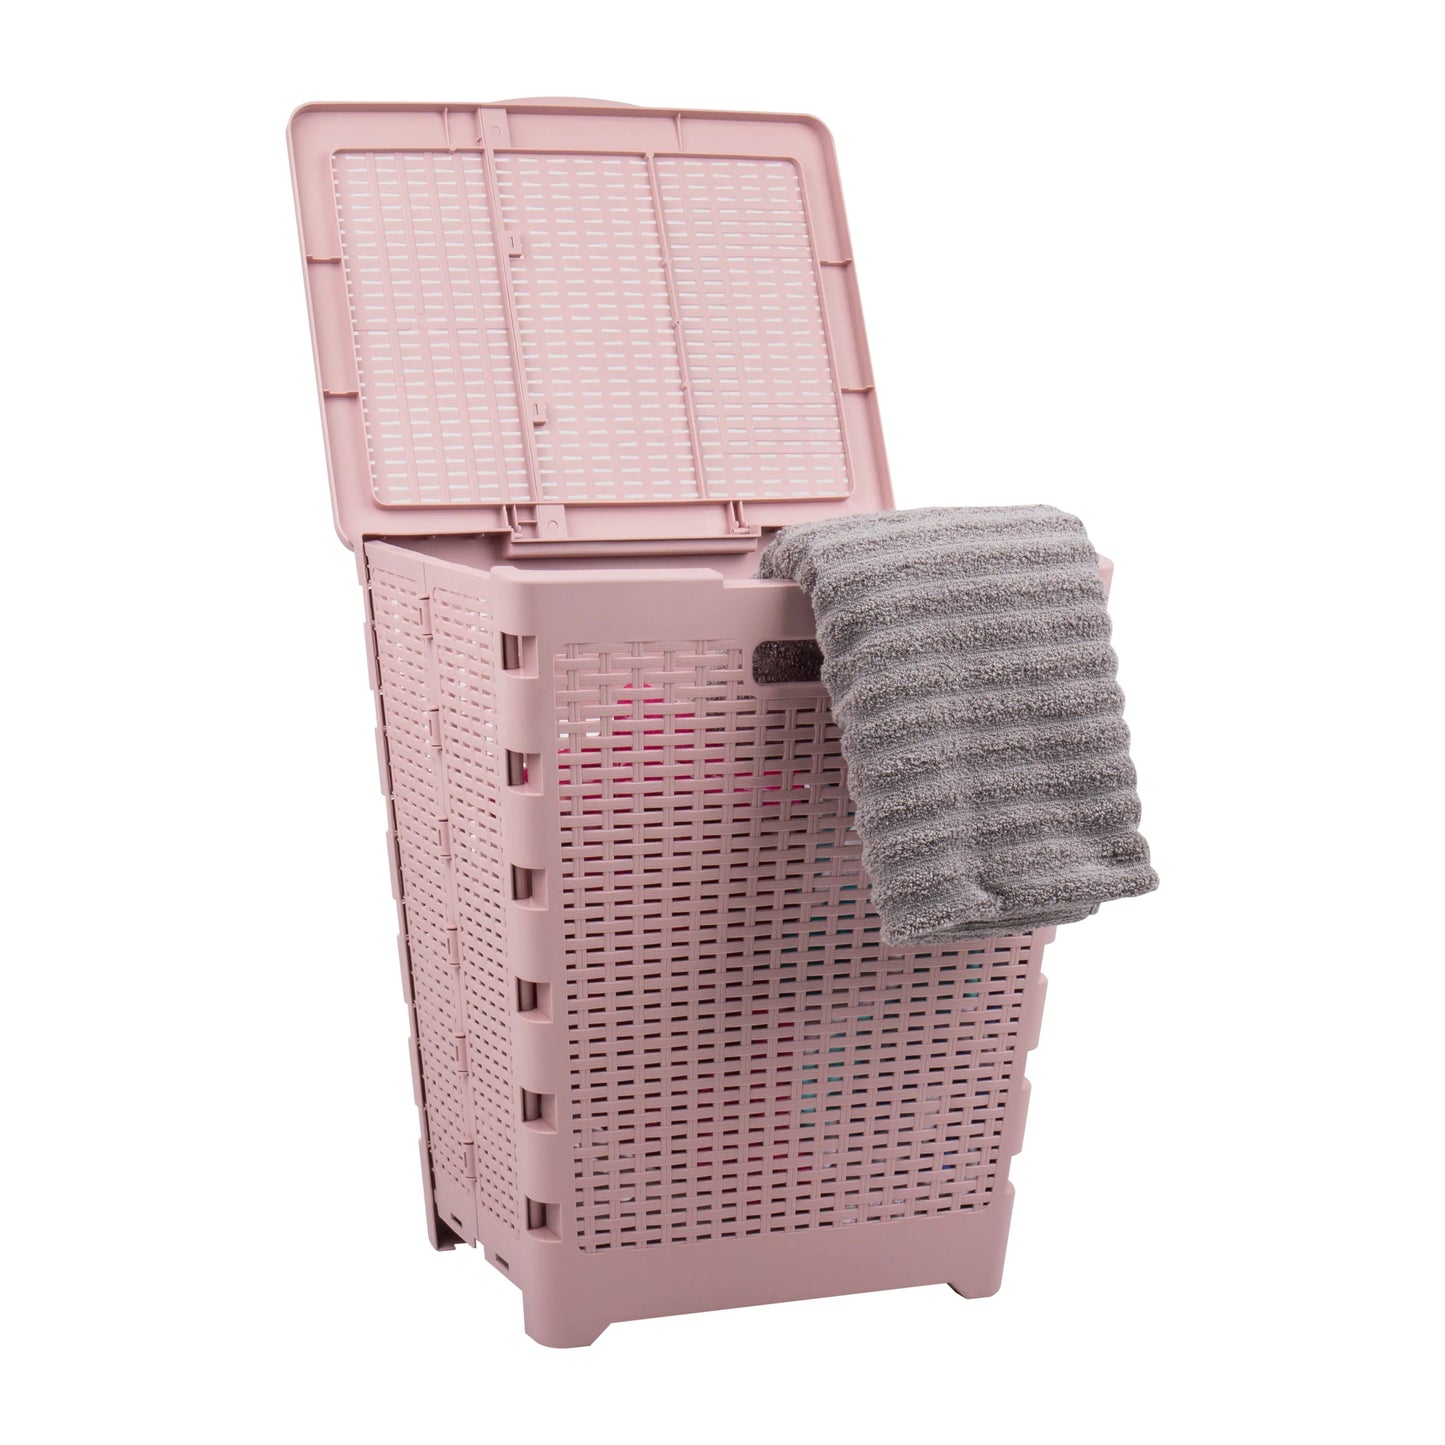 Mind Reader 61L Foldable Laundry Hamper, Clothes Basket, Lid, Wicker Design, Plastic, 18"L x 14.5"W x 21.25"H